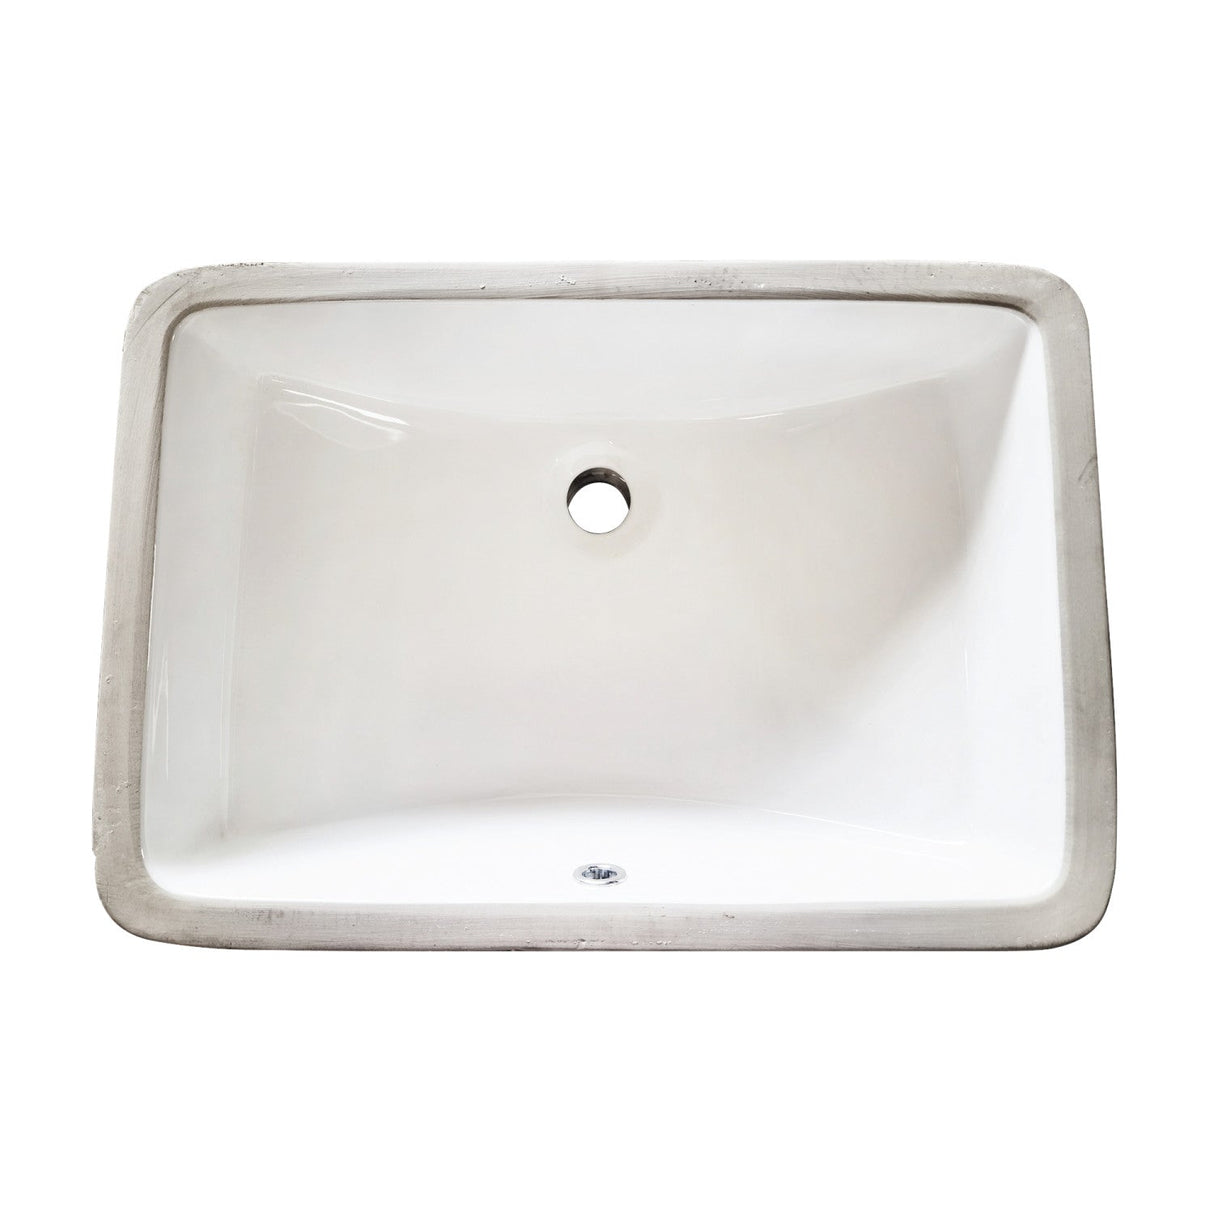 Piazza LB21158 21-Inch Ceramic Undermount Bathroom Sink, White